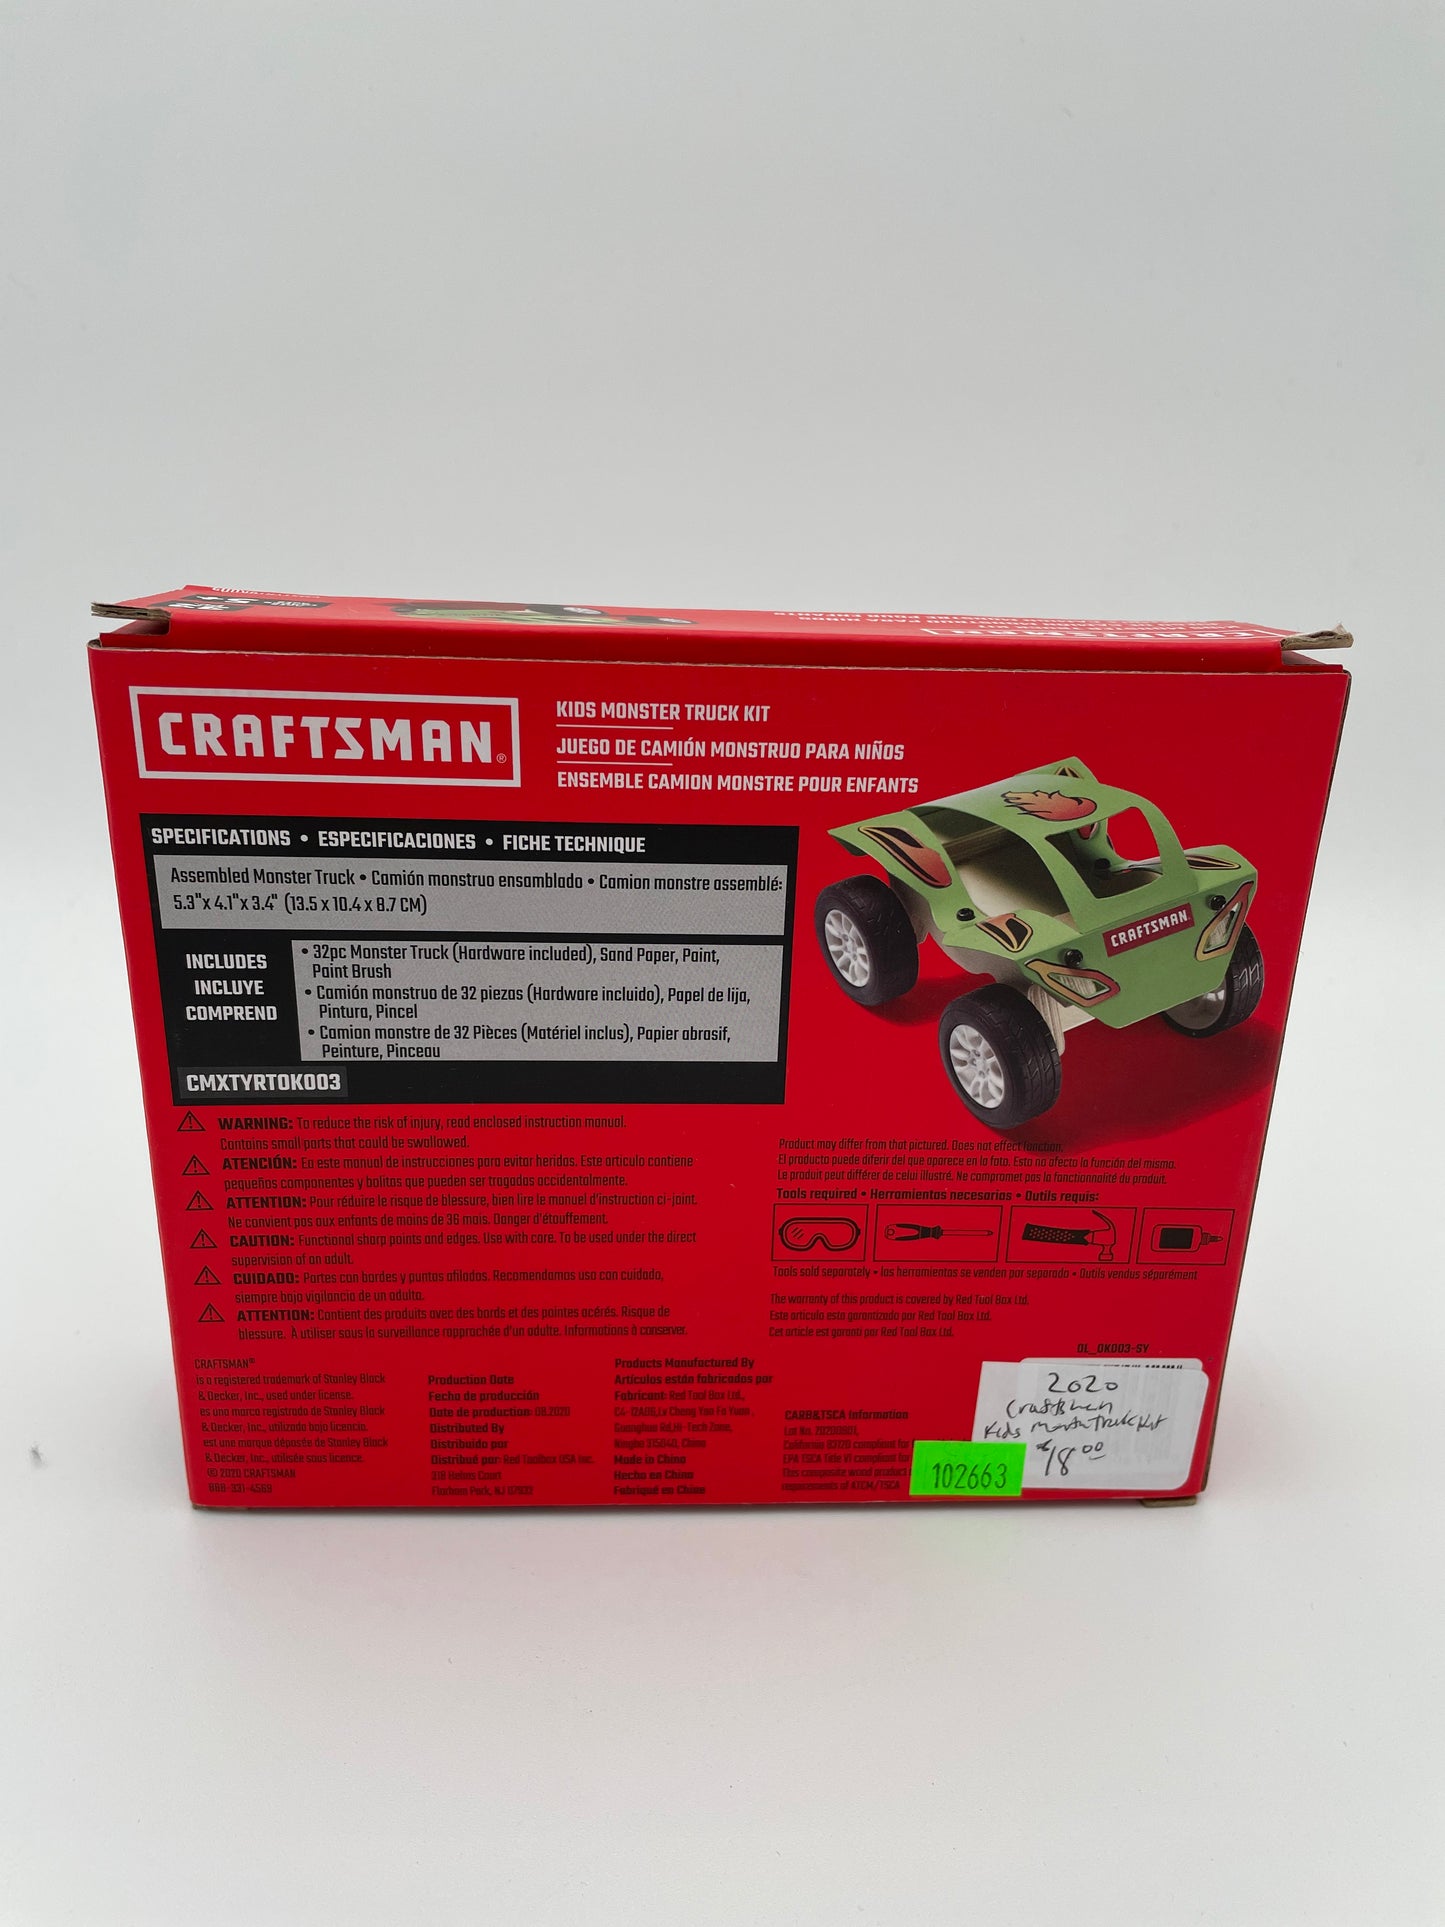 Craftsman - Kids Monster Truck Kit 2020 #102663